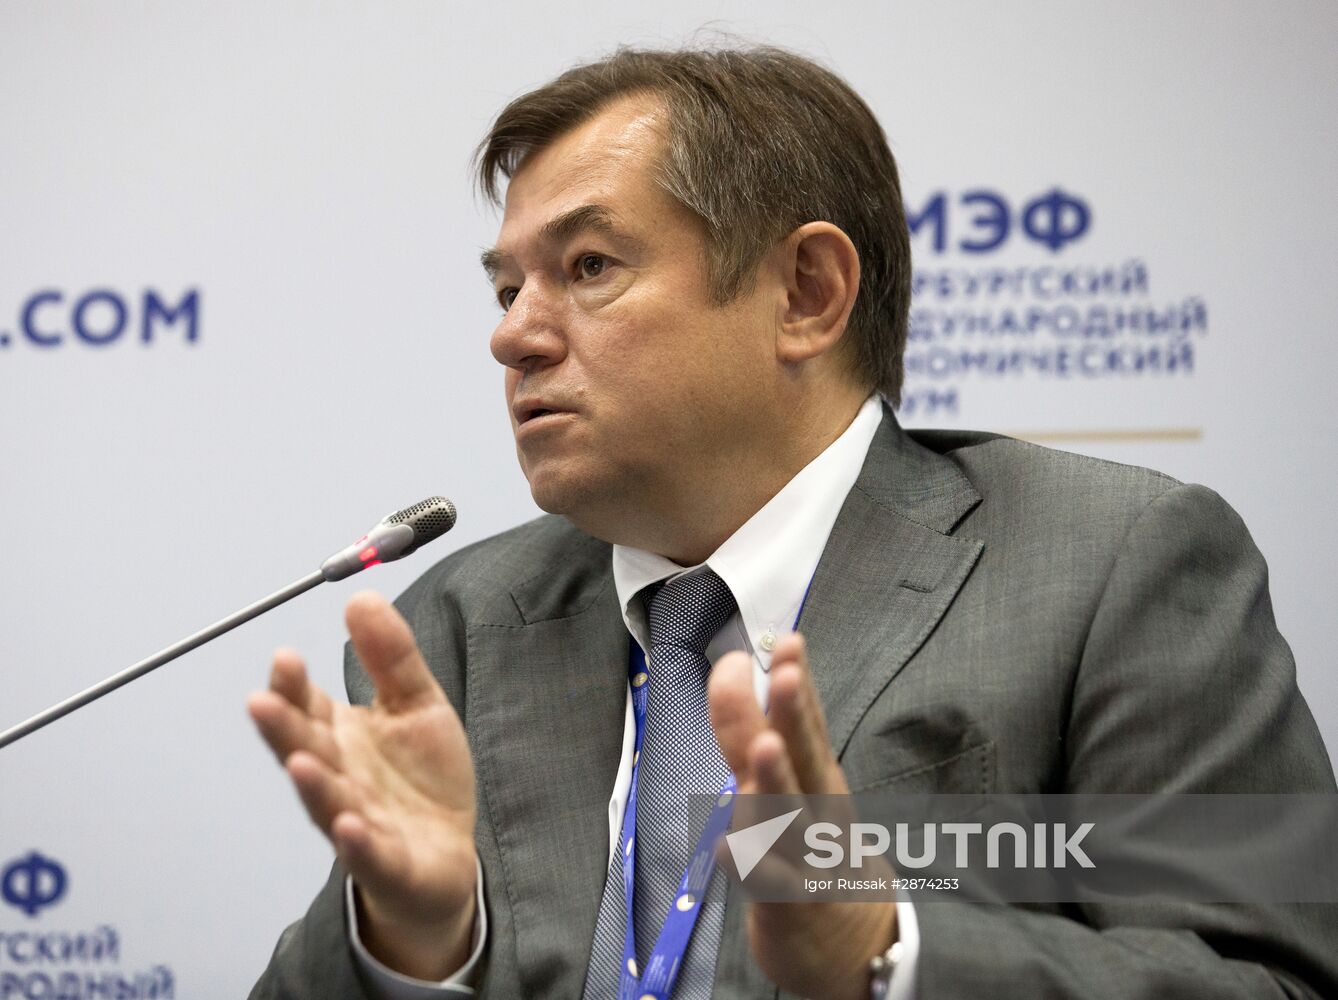 SPIEF-2016 panel session "The Russian Economic Growth Agenda"